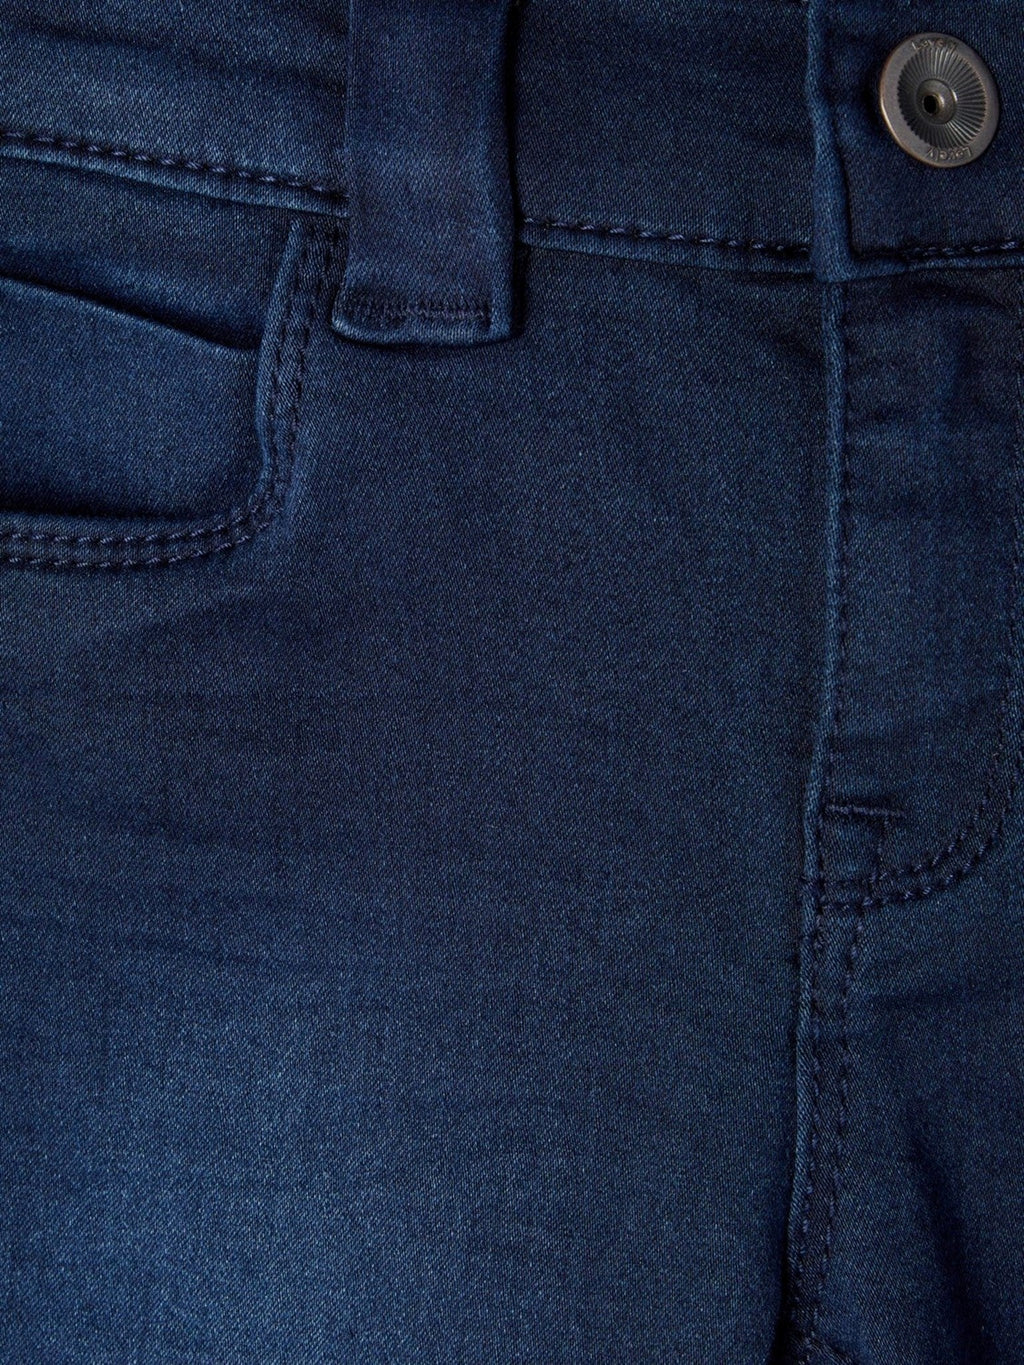 Polly Jeans - Dark Blue Denim